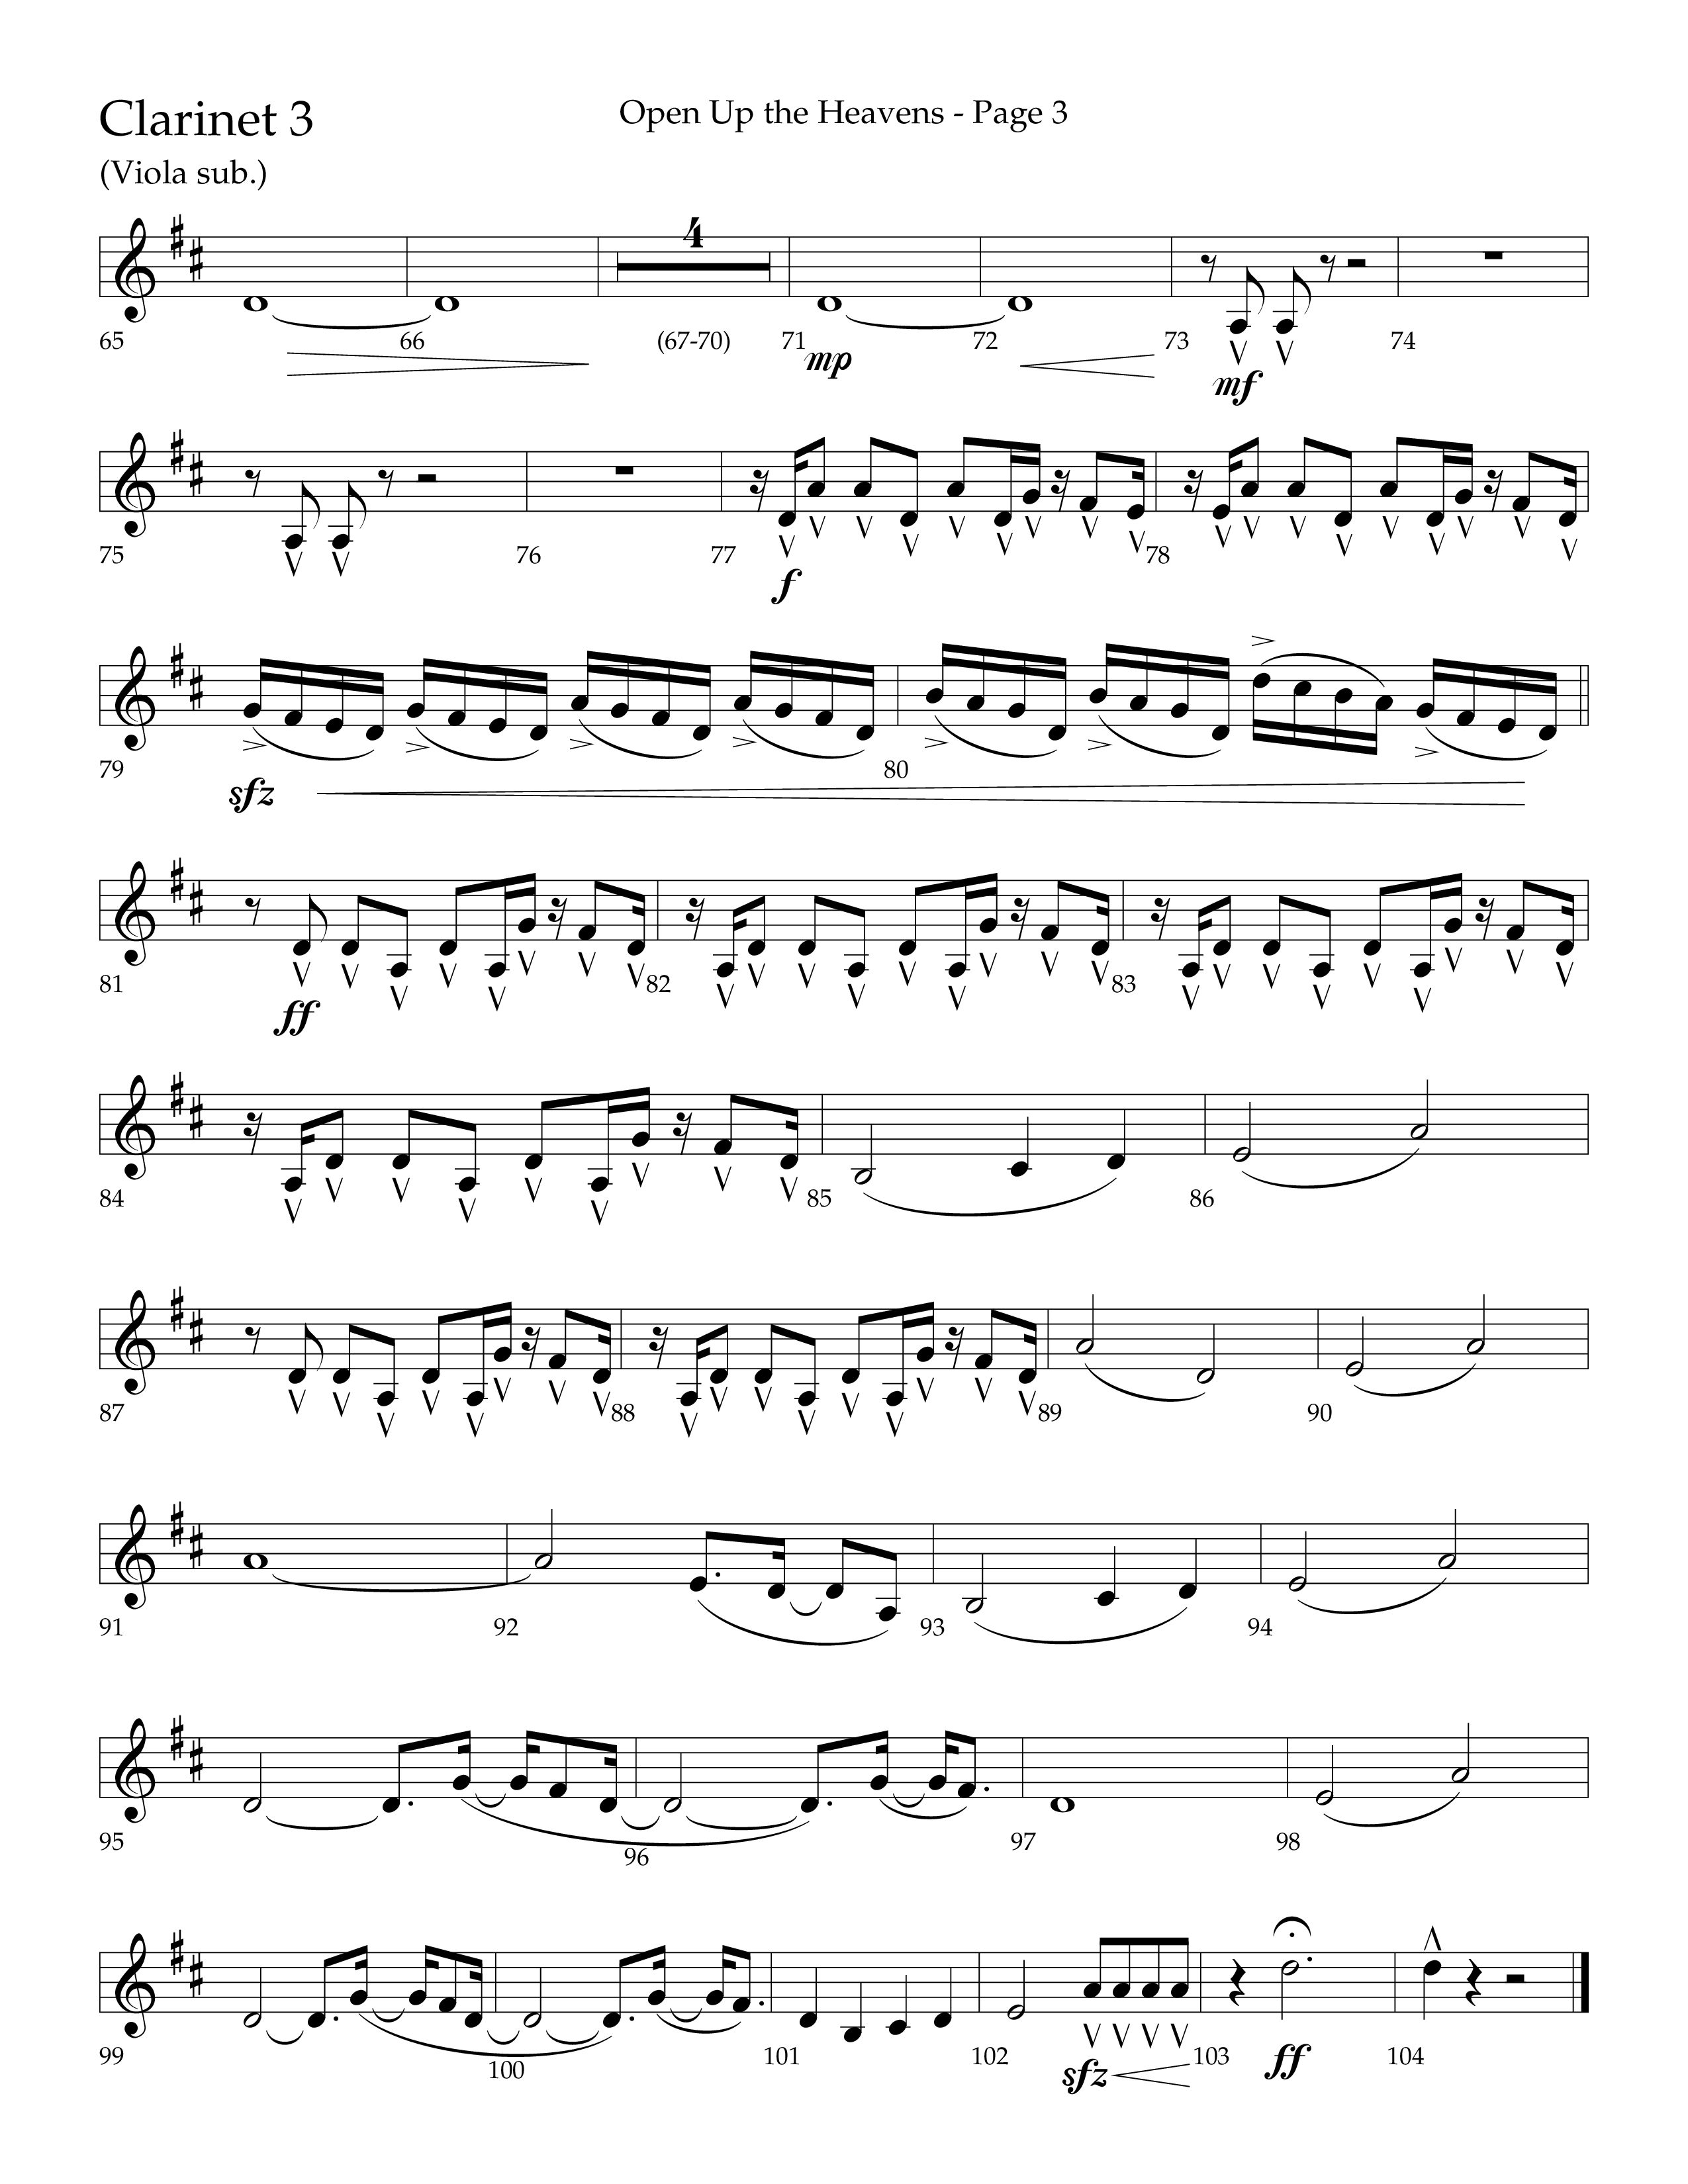 Open Up The Heavens (Choral Anthem SATB) Clarinet 3 (Lifeway Choral / Arr. Cliff Duren)